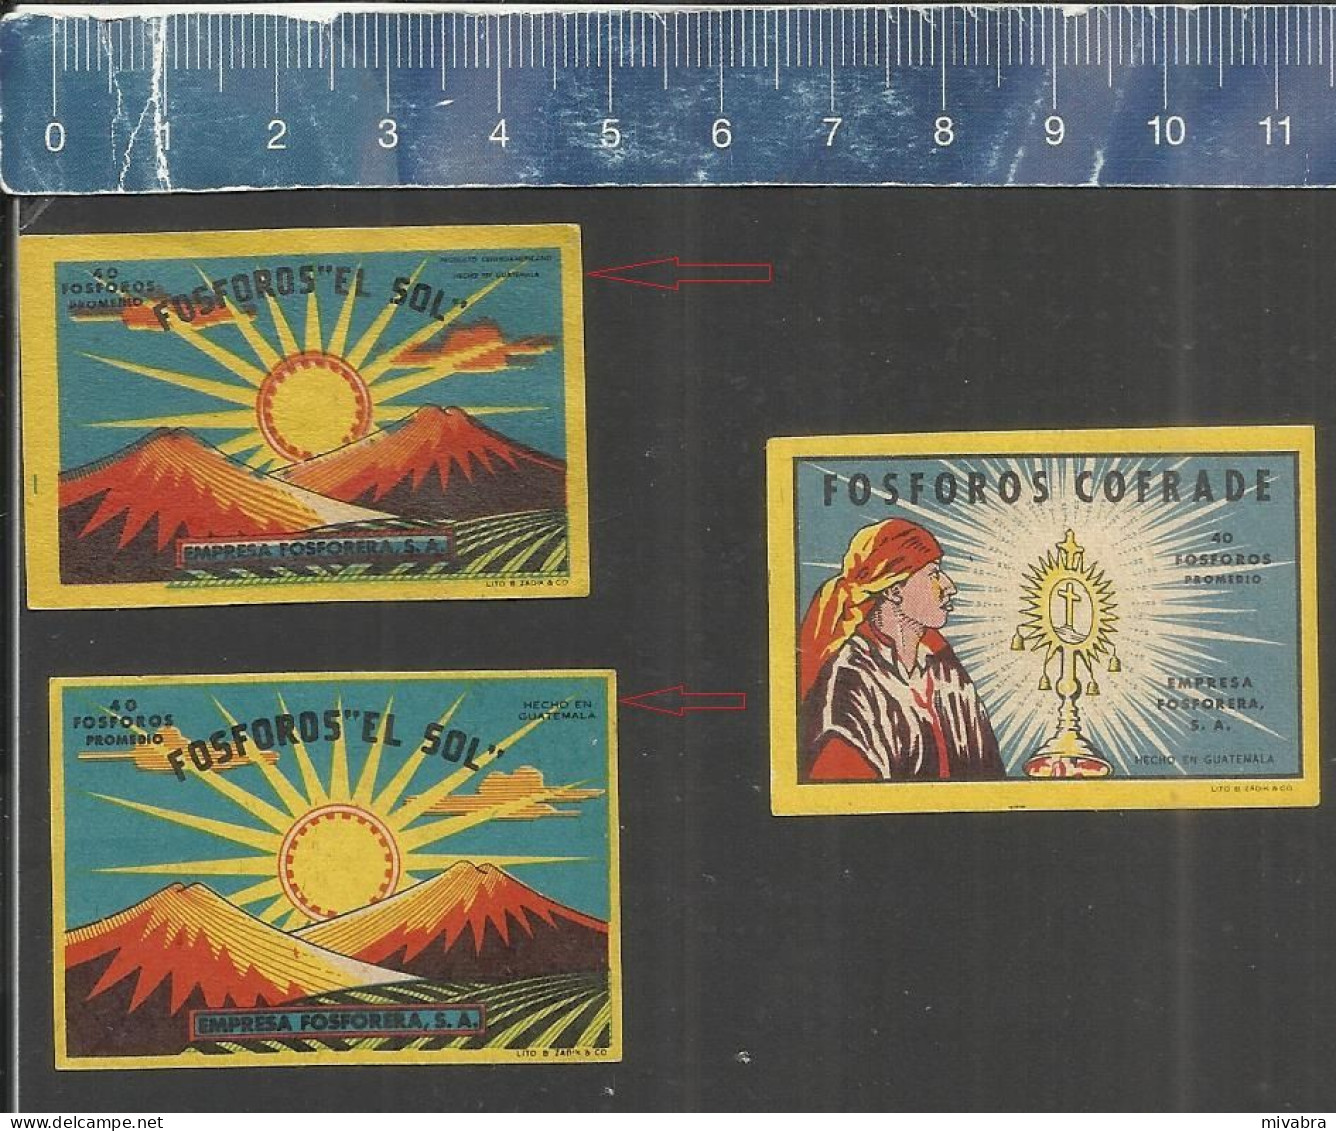 FOSFOROS EL SOL & COFRADE - OLD MATCHBOX LABELS MADE IN GUATEMALA - Scatole Di Fiammiferi - Etichette